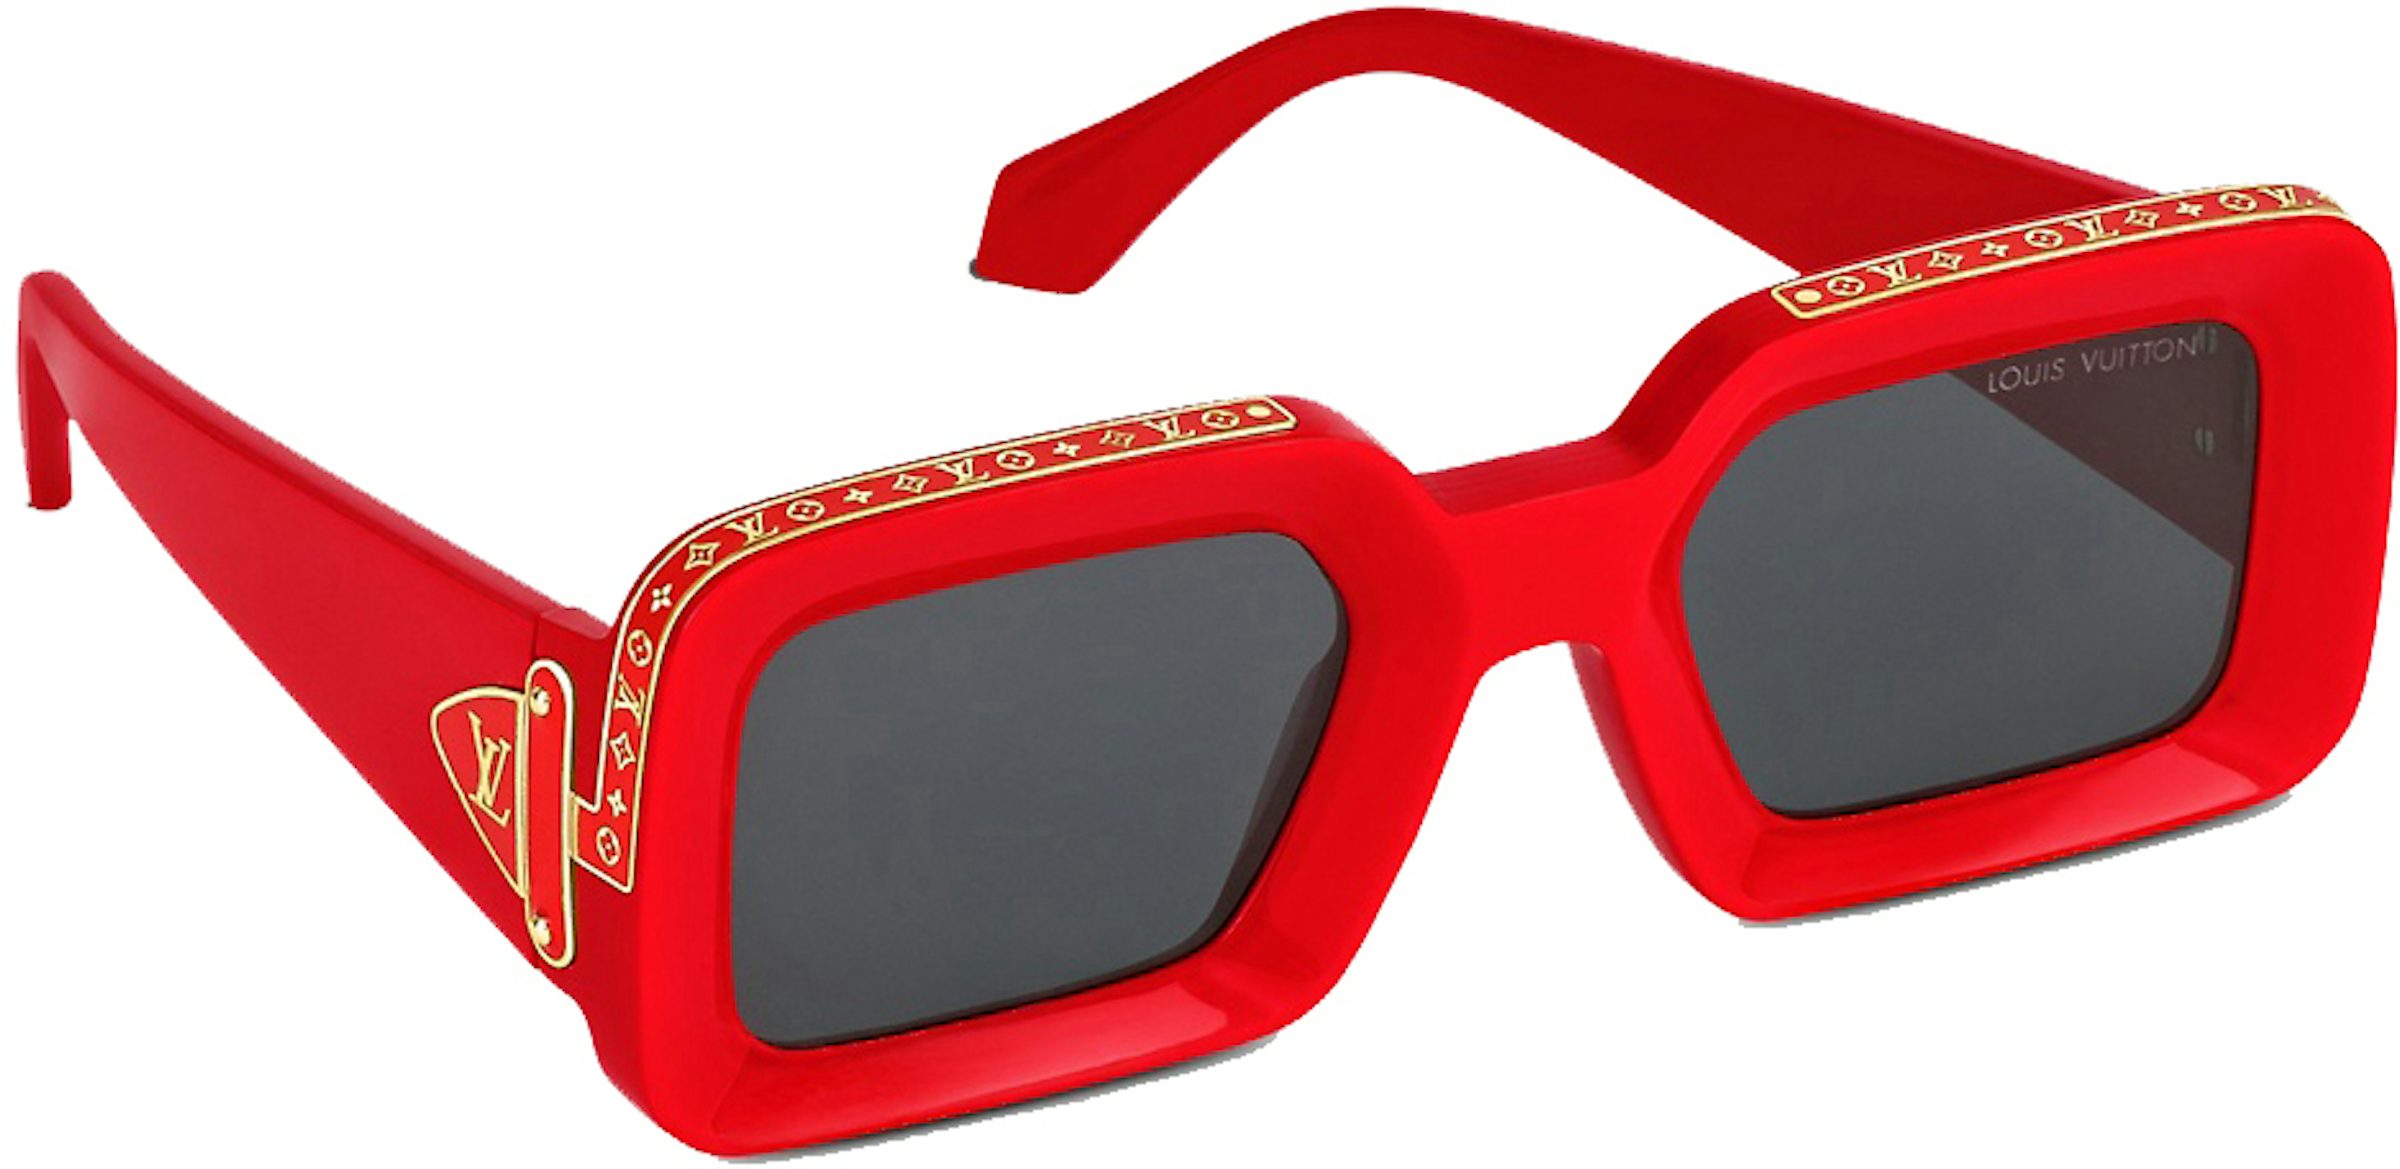 Louis Vuitton X Supreme M Logo Sunglasses - red